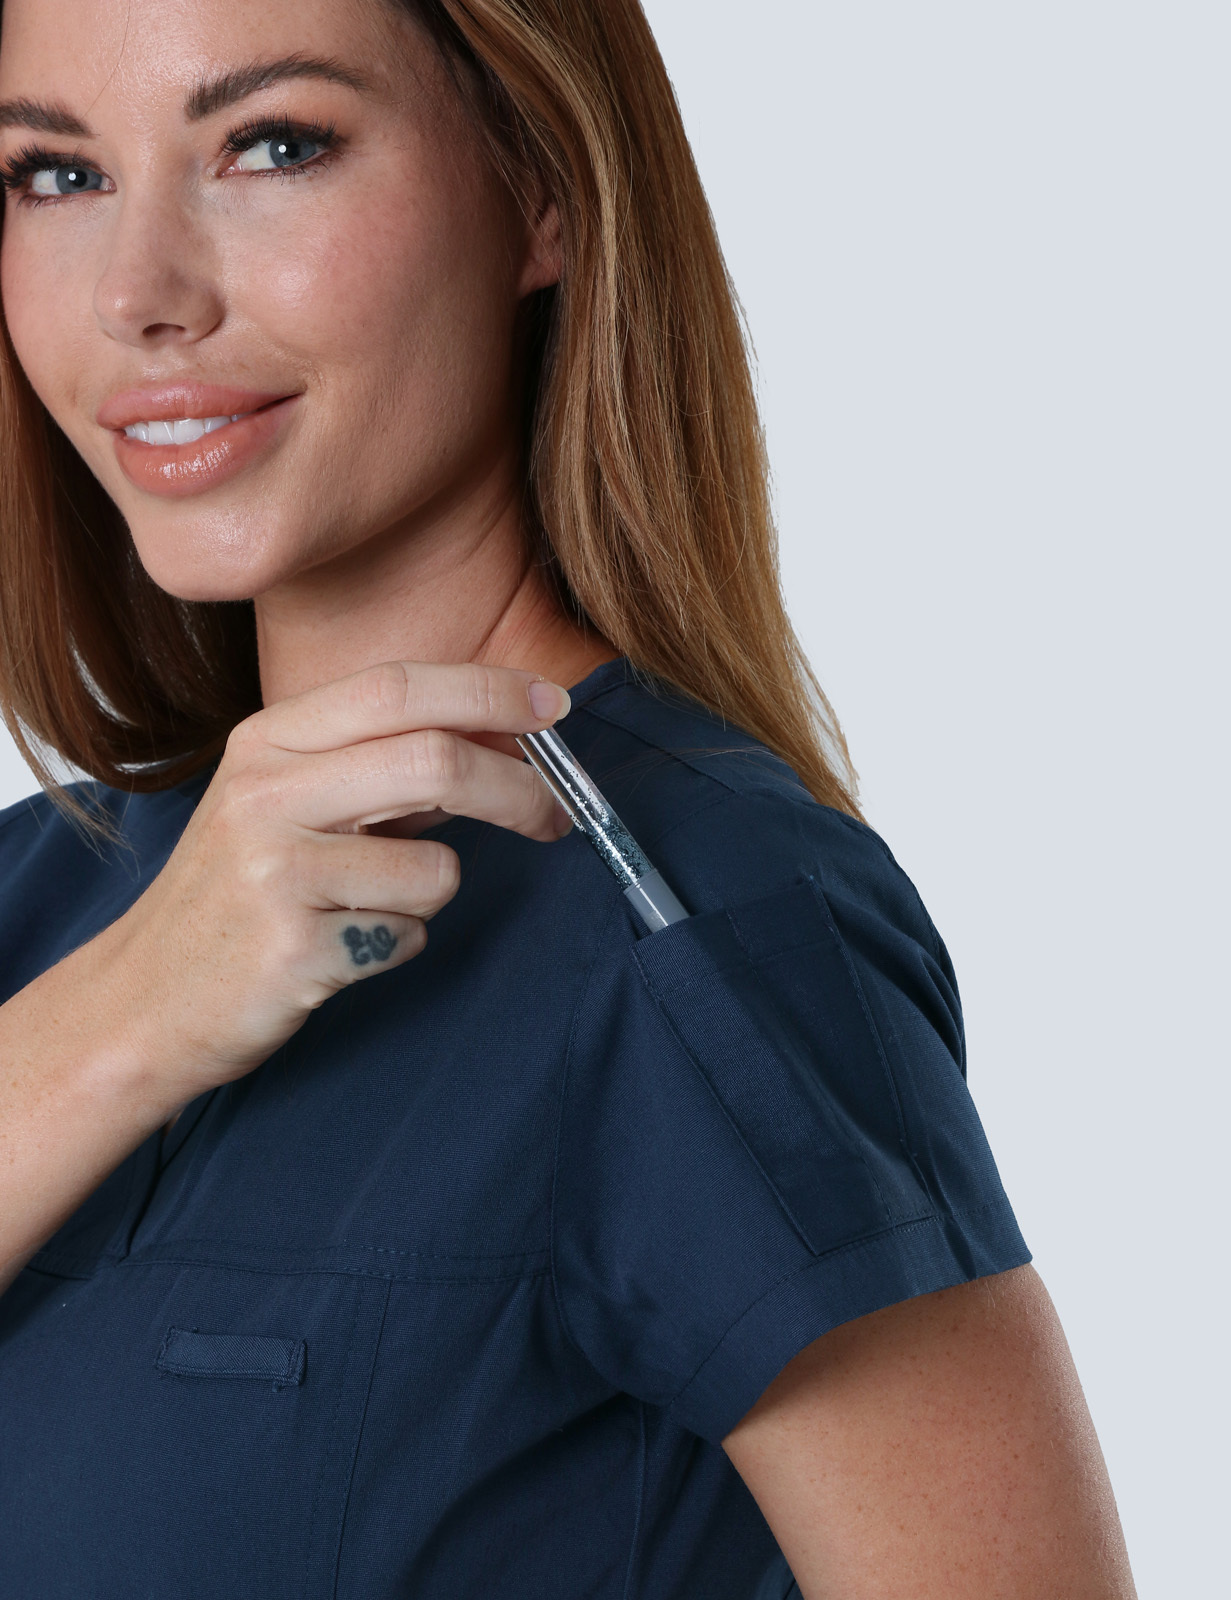 Canberra Hospital - Podiatrist (Women's Fit Solid Scrub Top + Logos)